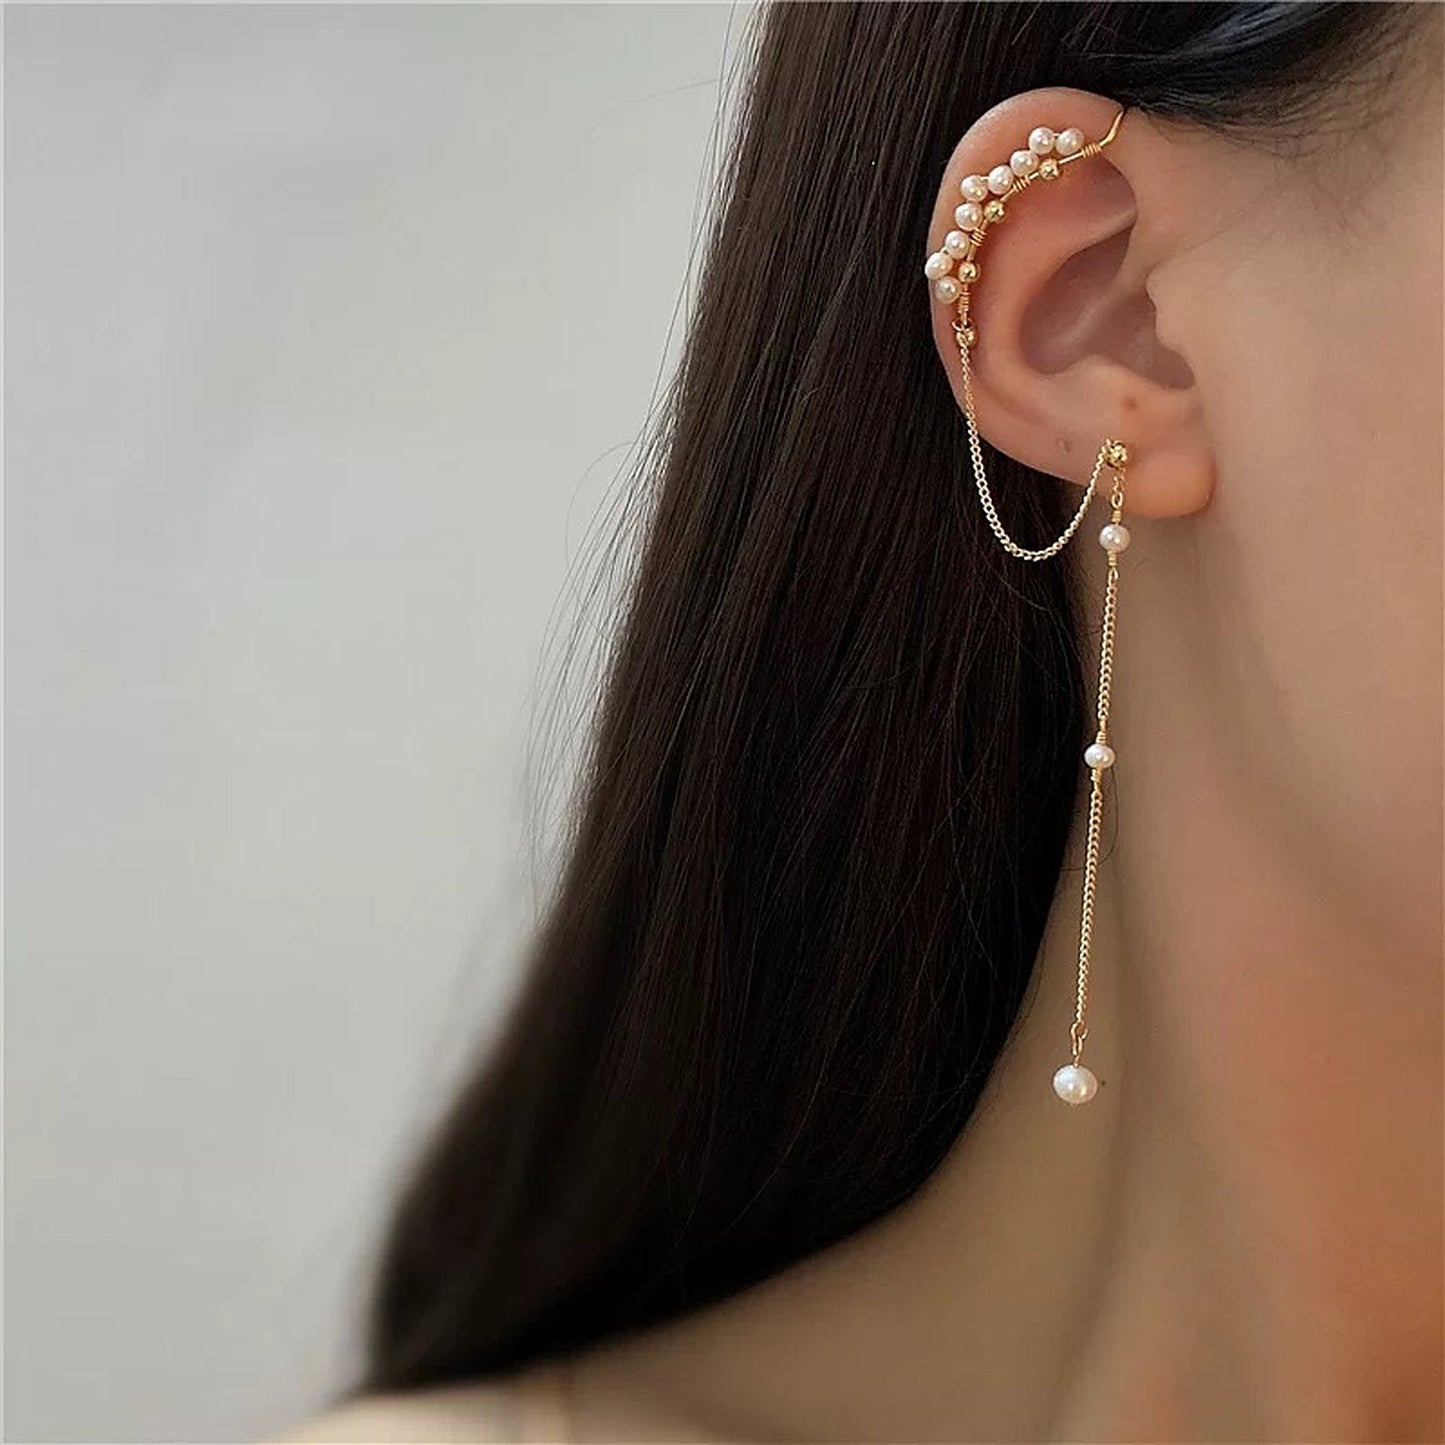 Pearl gold ear wrap, Floral ear cuff, Pearl ear climber, Floral ear cuff, Long dangle earrings, Minimalist ear climber, Bridesmaid earrings